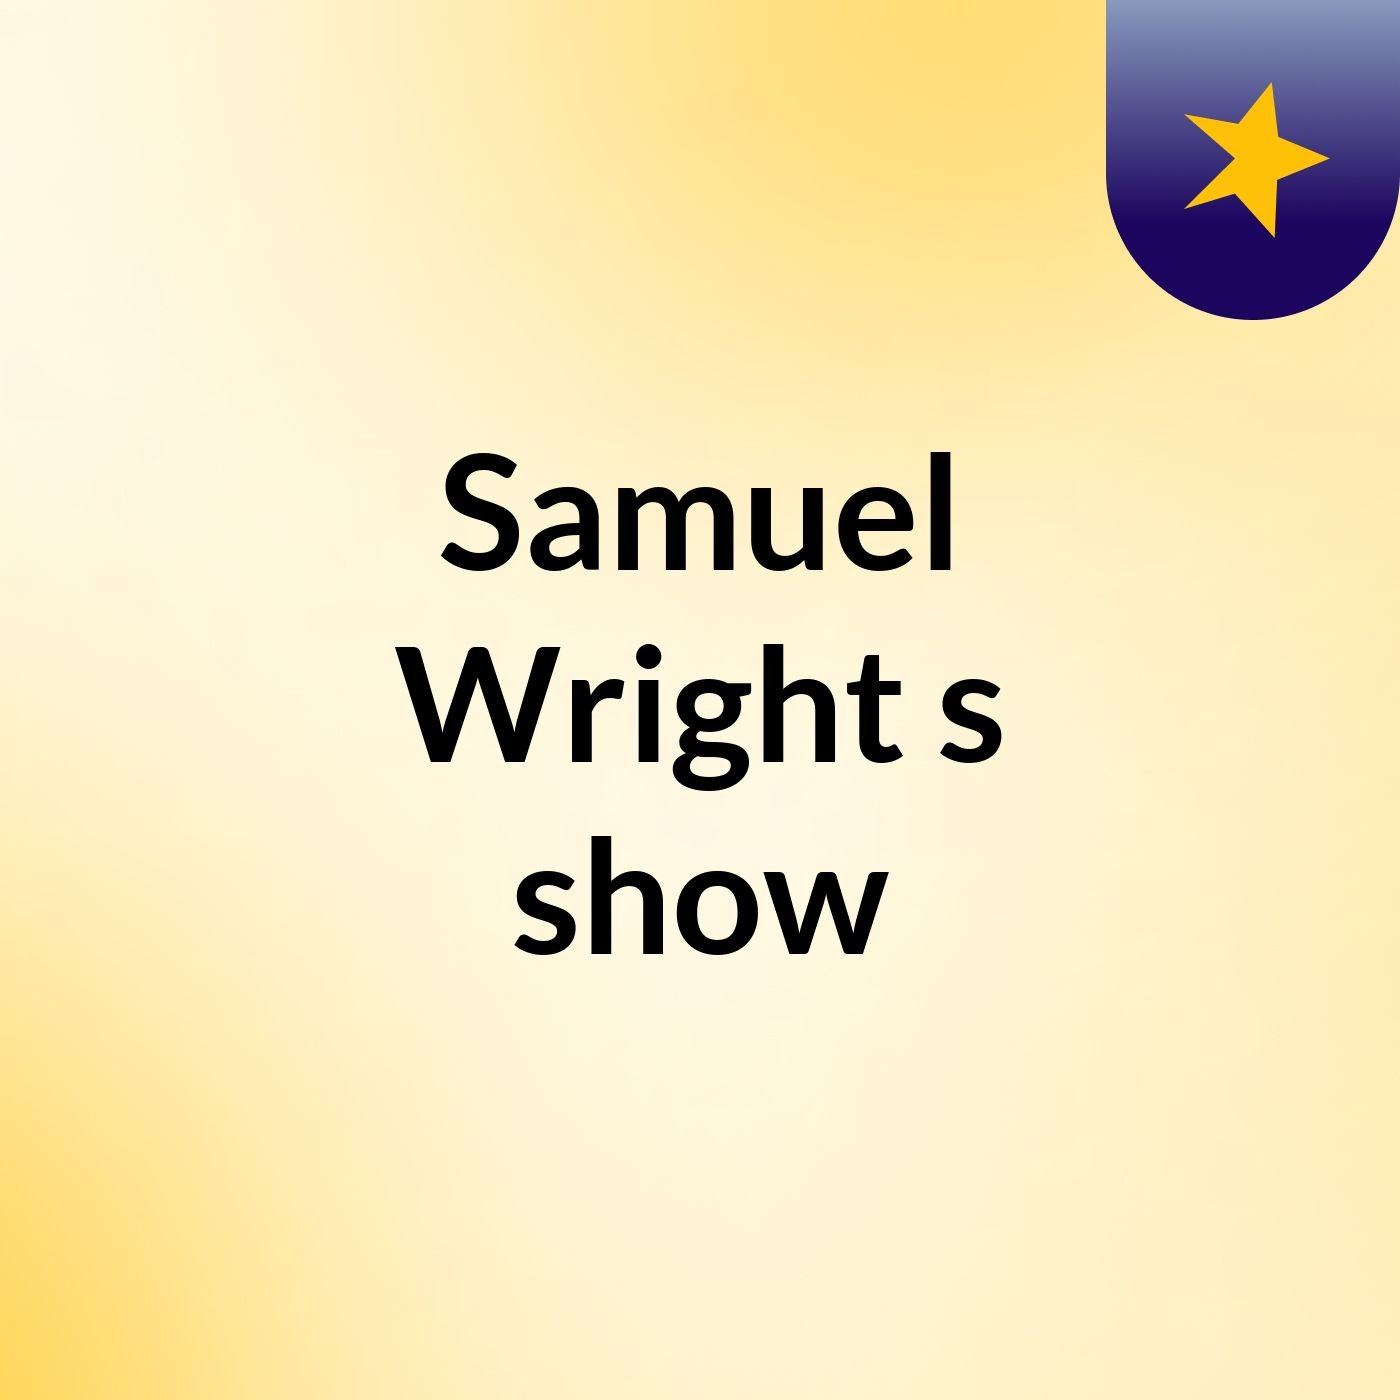 Samuel Wright's show